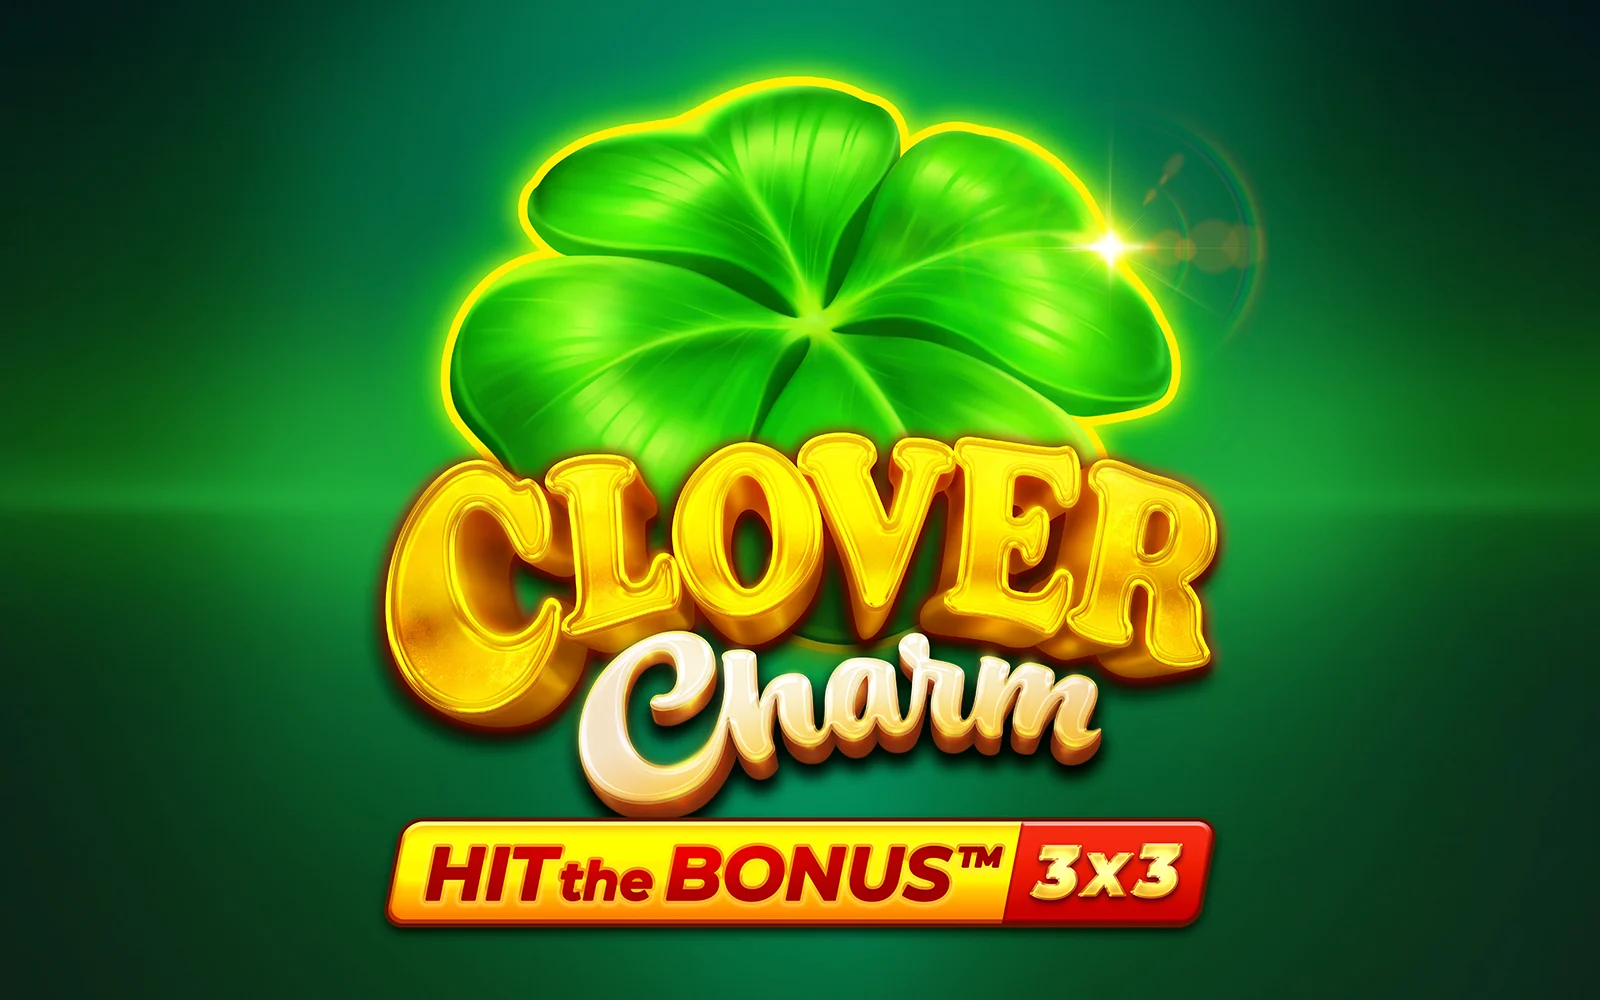 Play Clover Charm: Hit the Bonus ™ on Starcasino.be online casino